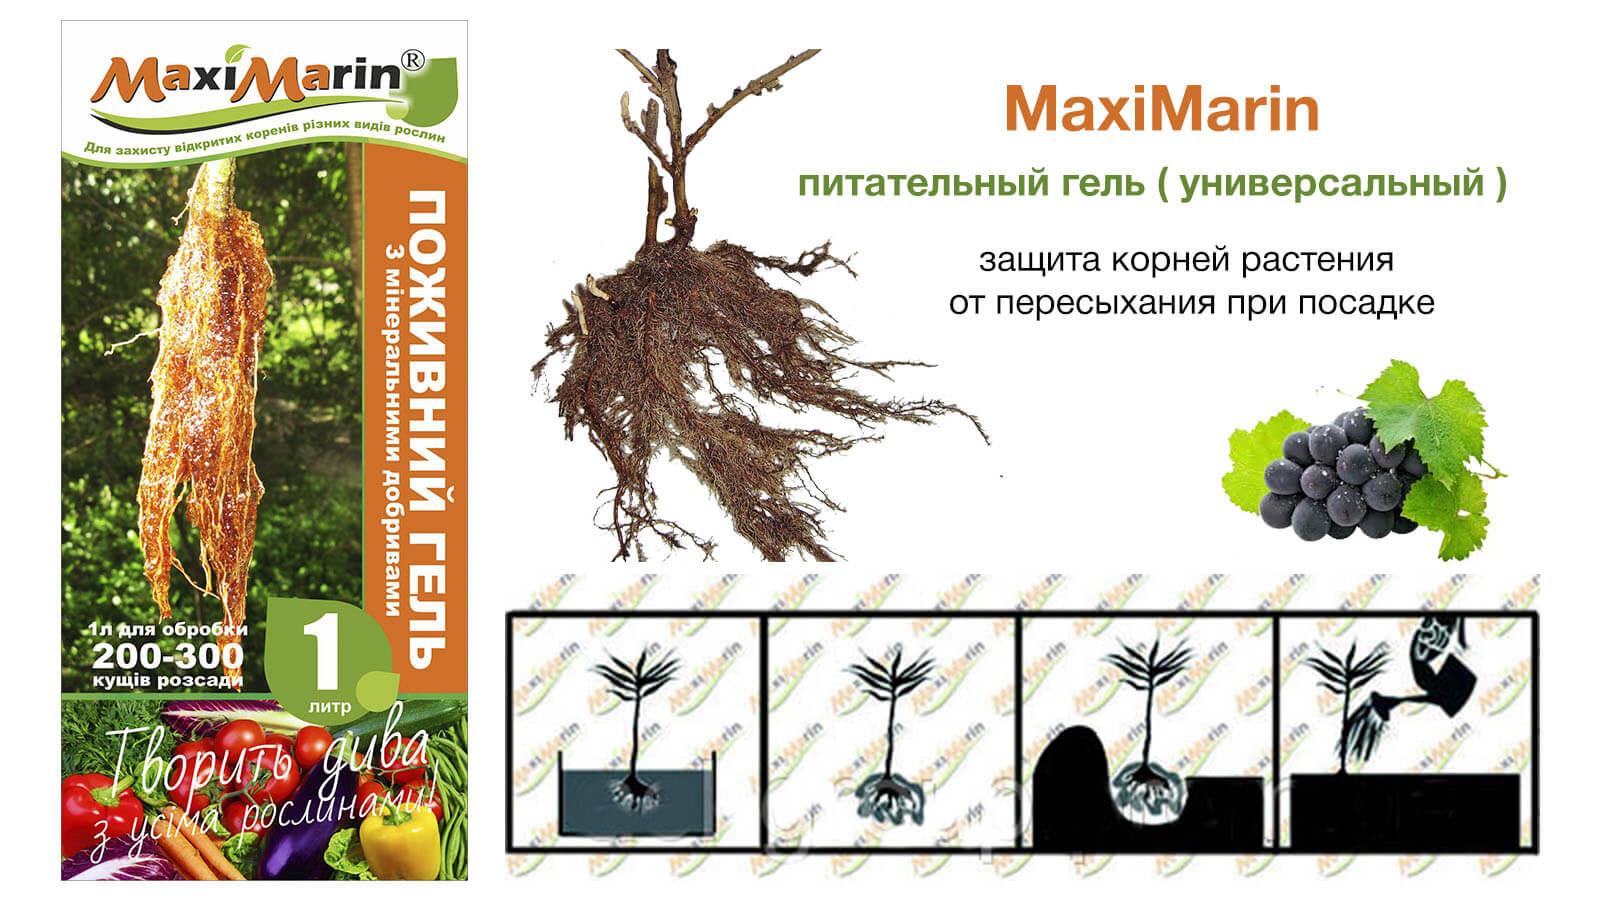 MaxiMarin universalnyj gel rus